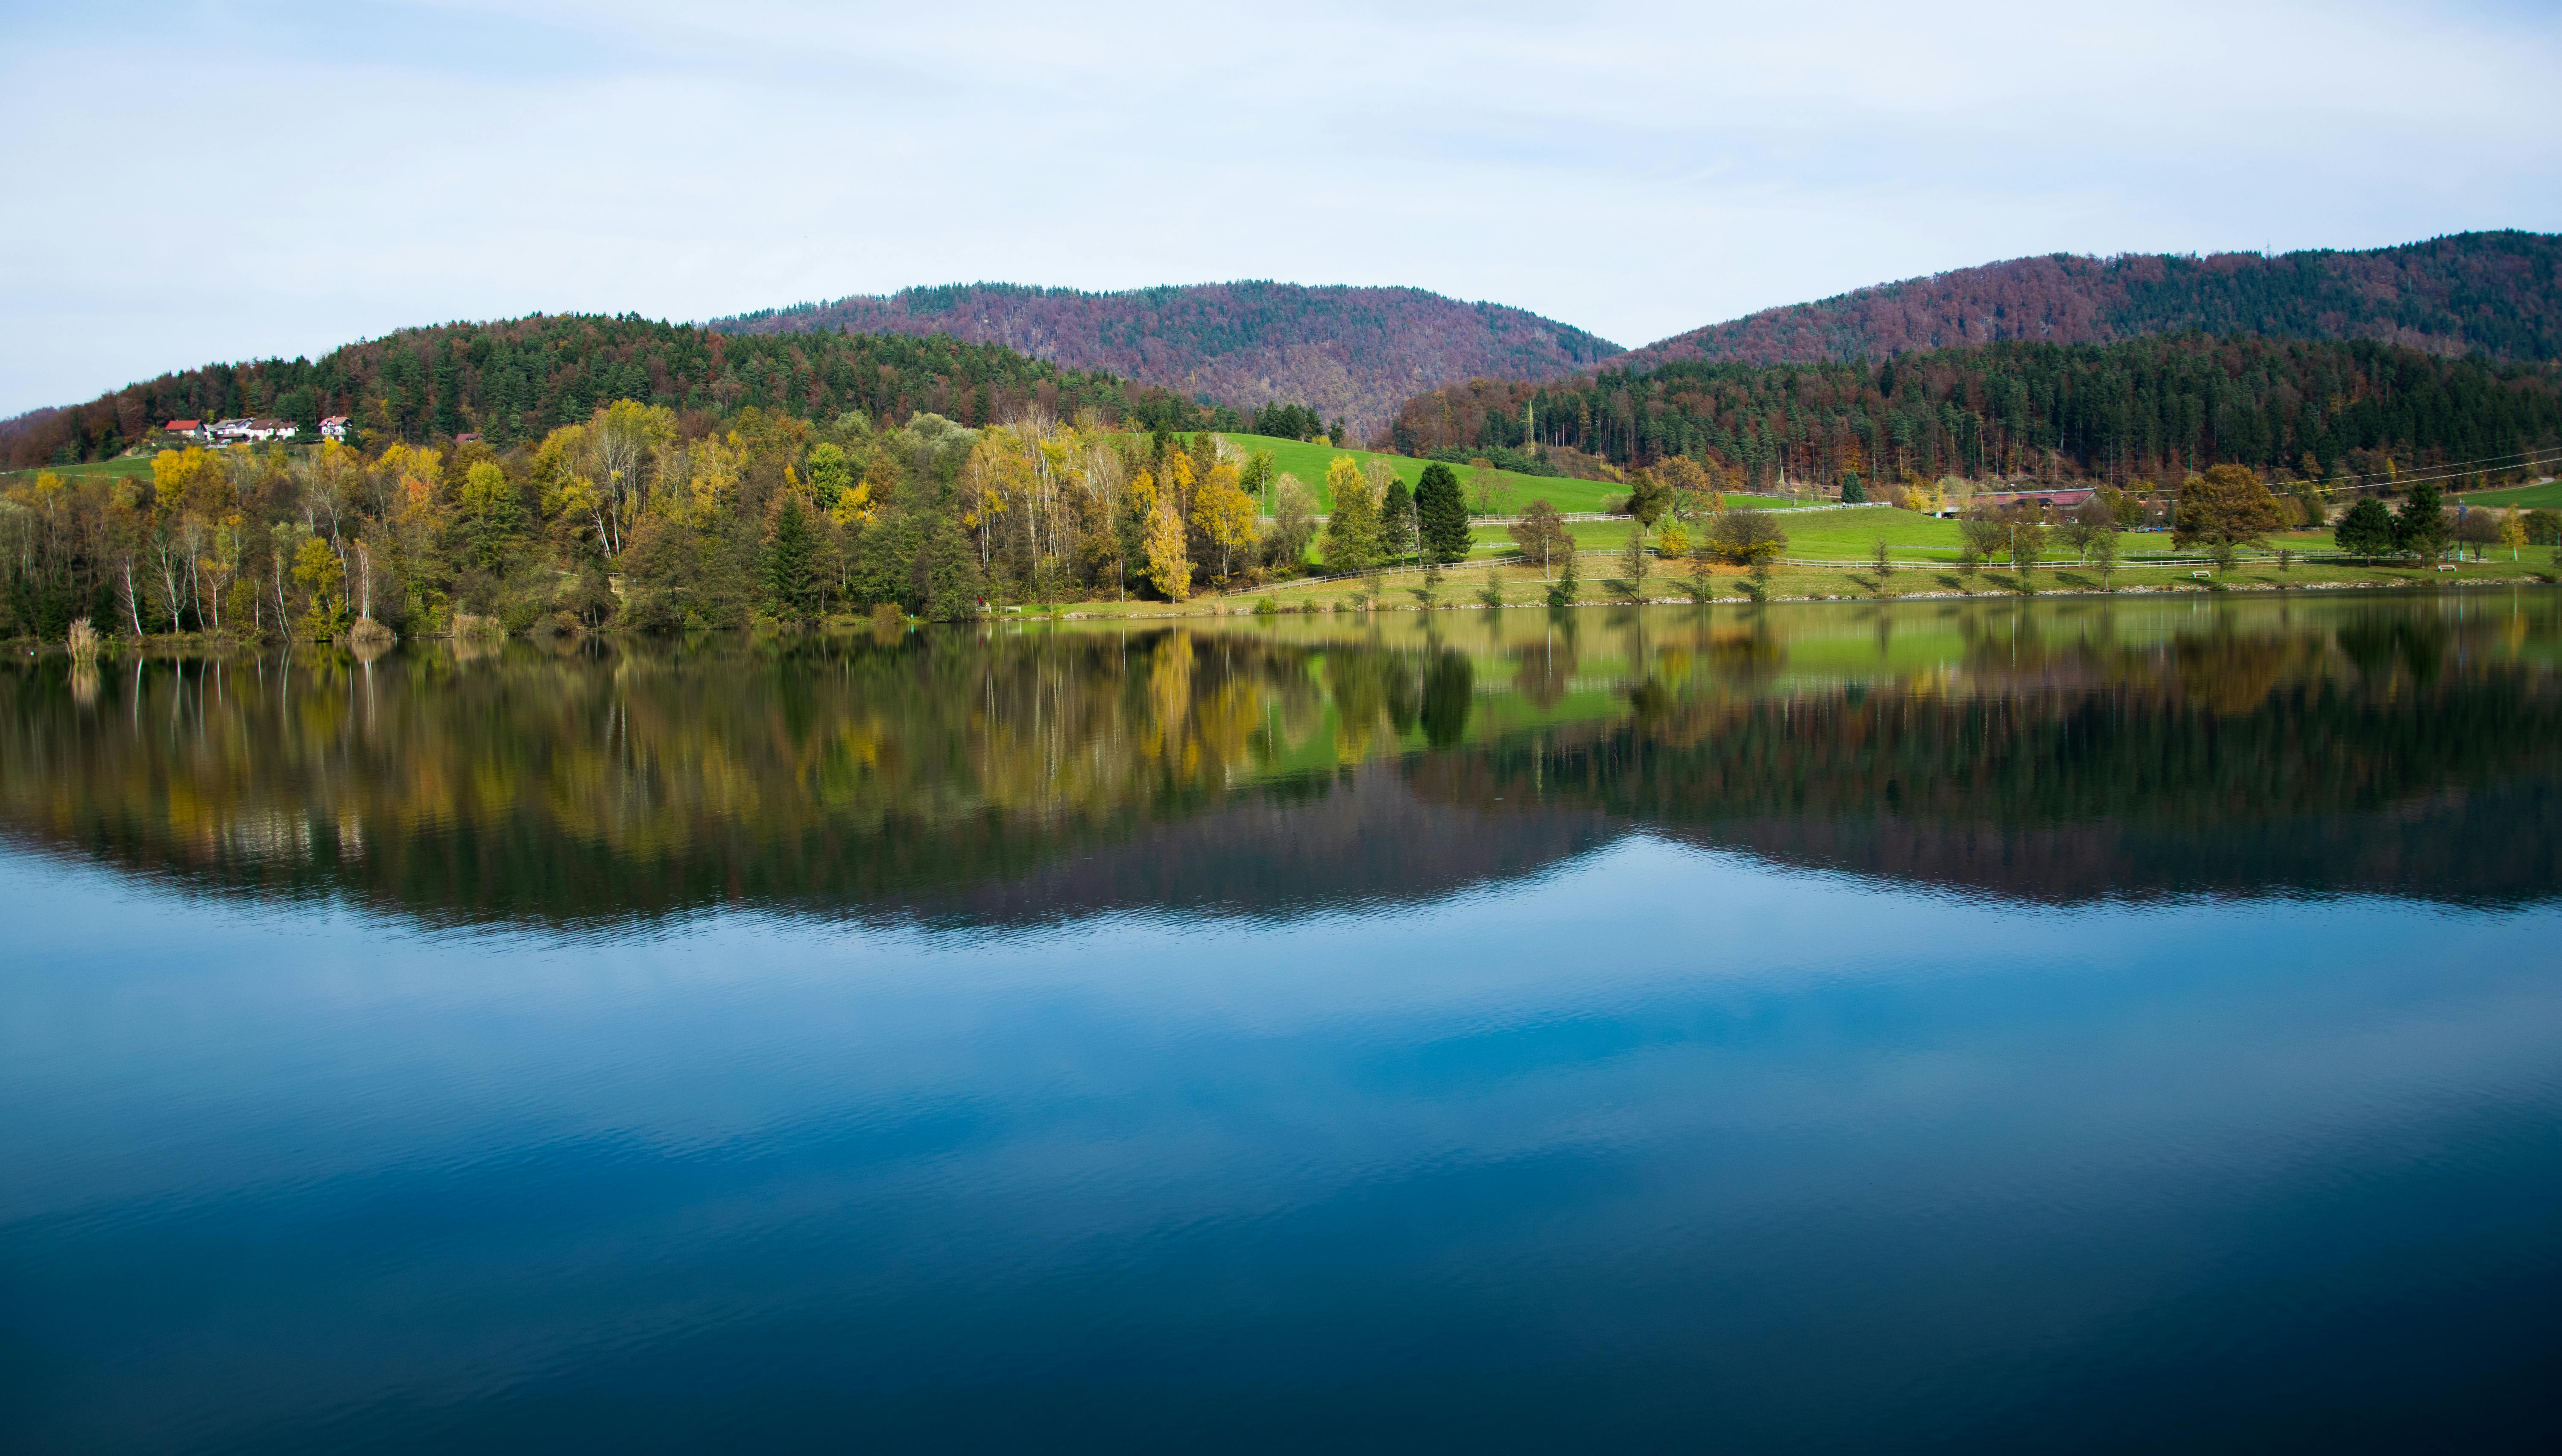 Free stock photo of lake lakeside forest trees reflection autumn sun